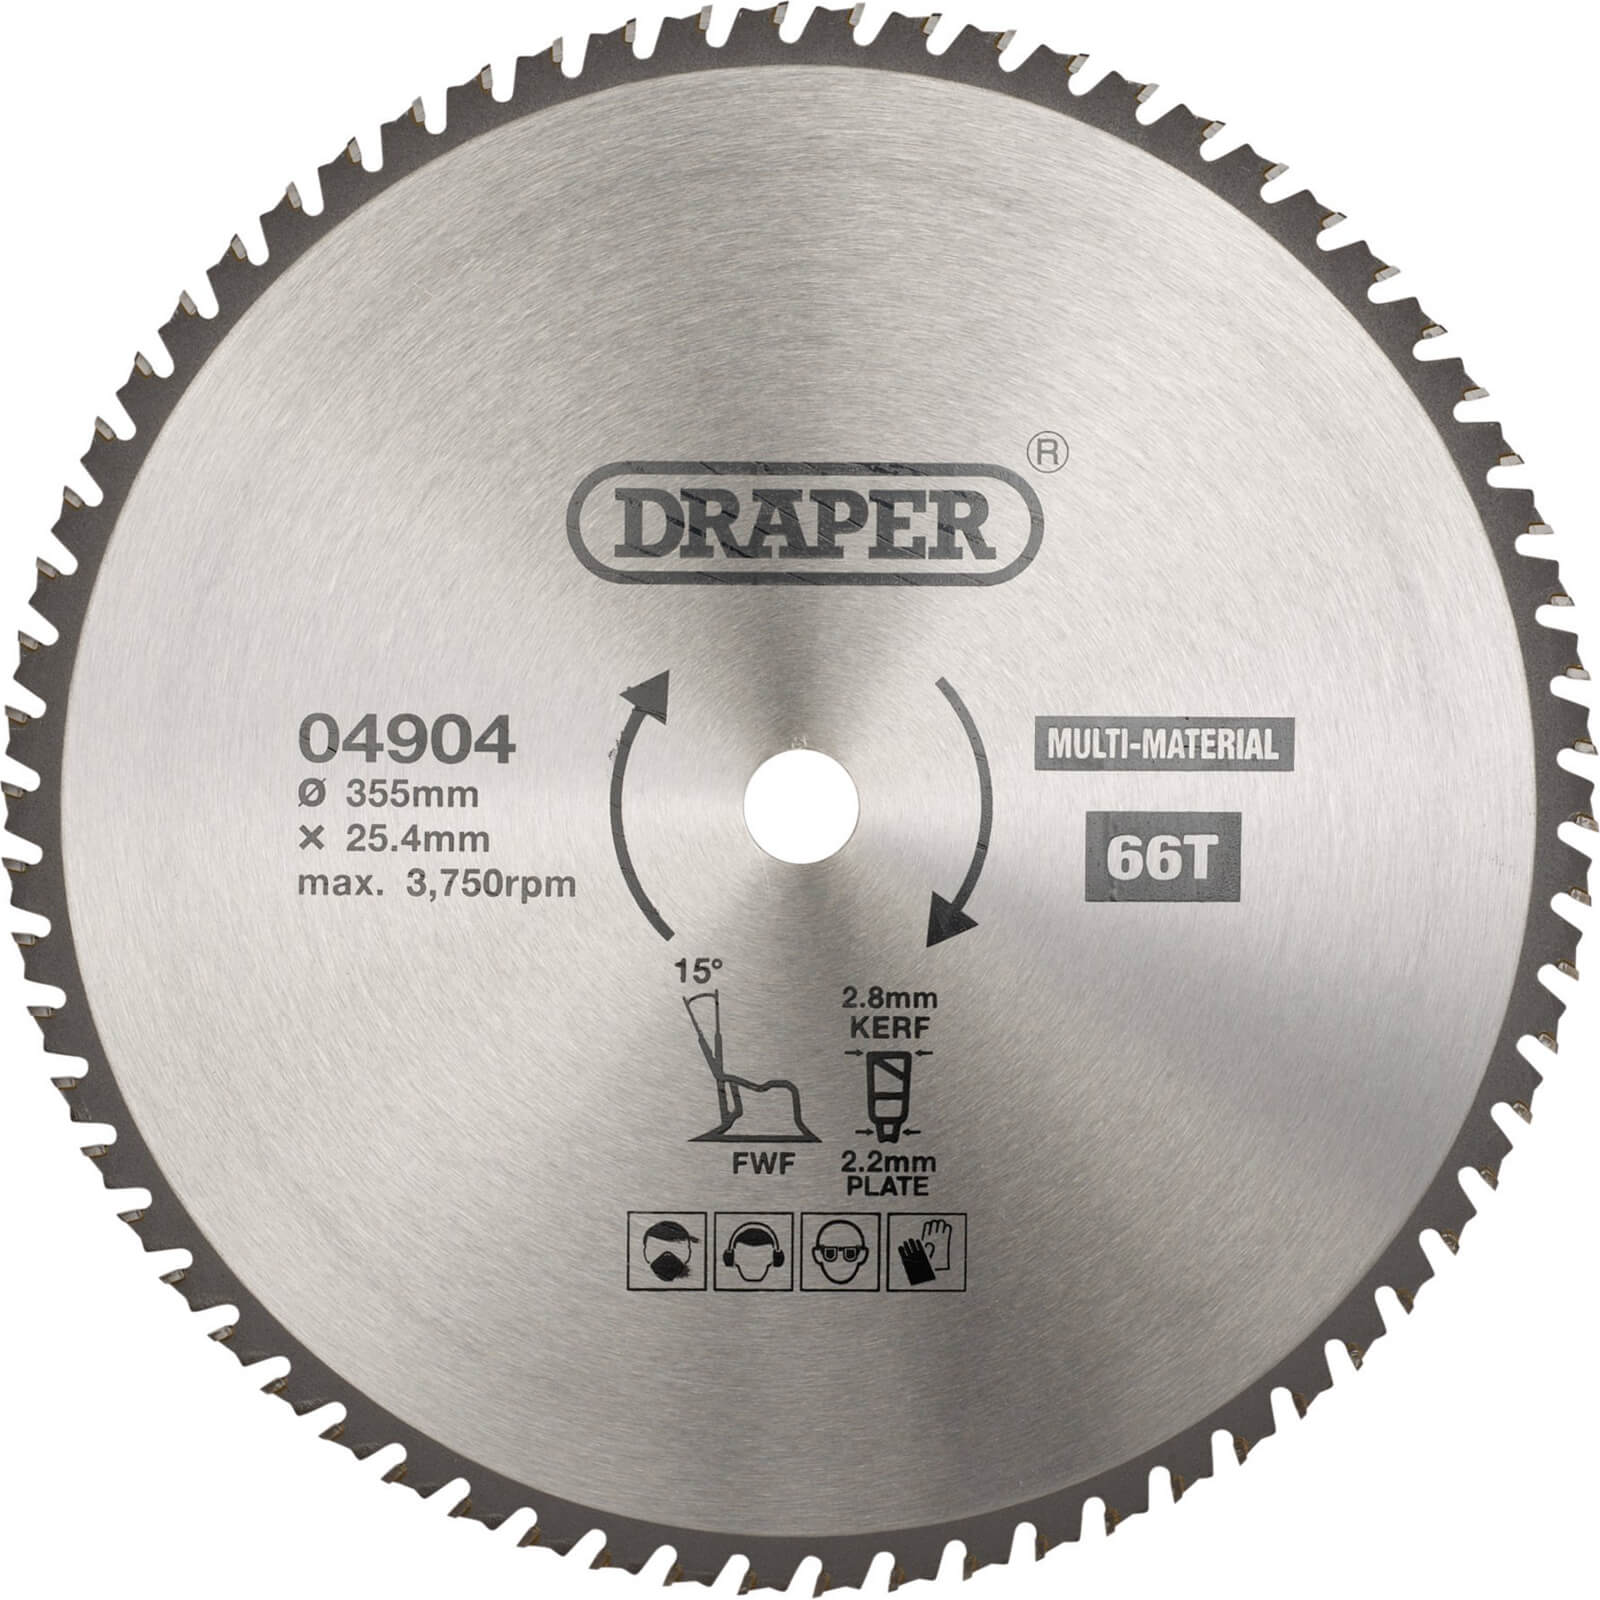 Photos - Power Tool Accessory Draper TCT Multi Purpose Circular Saw Blade 355mm 66T 25.4mm 04904 